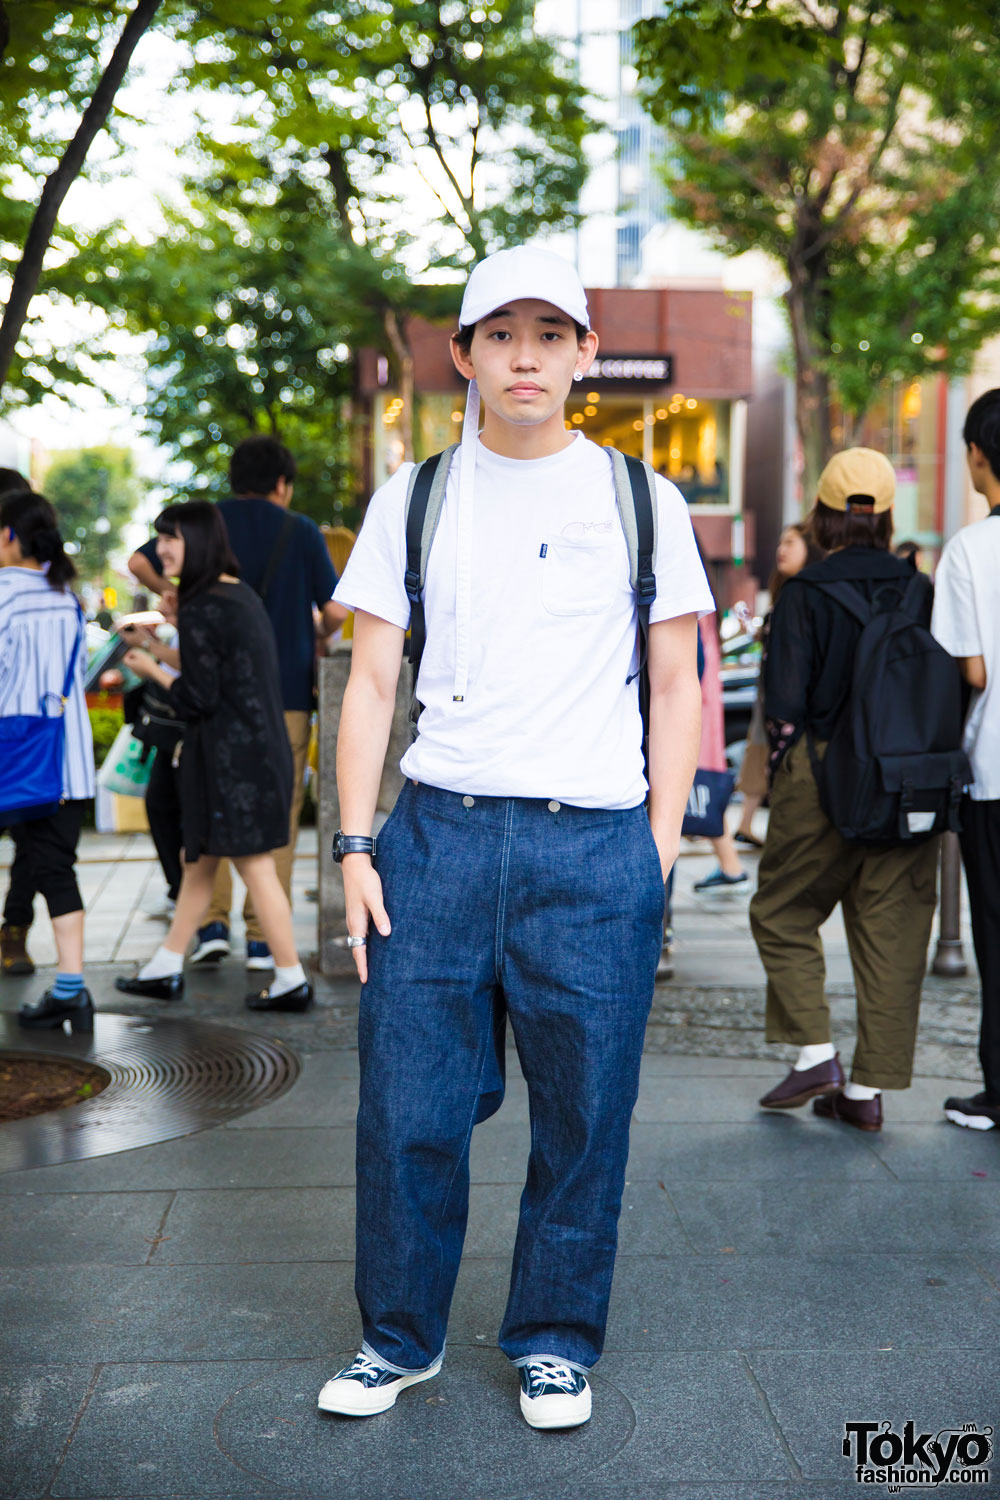 Harajuku Guy in White & Denim Streetwear w/ Ripndip, Tuki, Converse x Comme des Garcons, Cote & Ciel, Gucci, Maison Martin Margiela, Hublot & Cartier